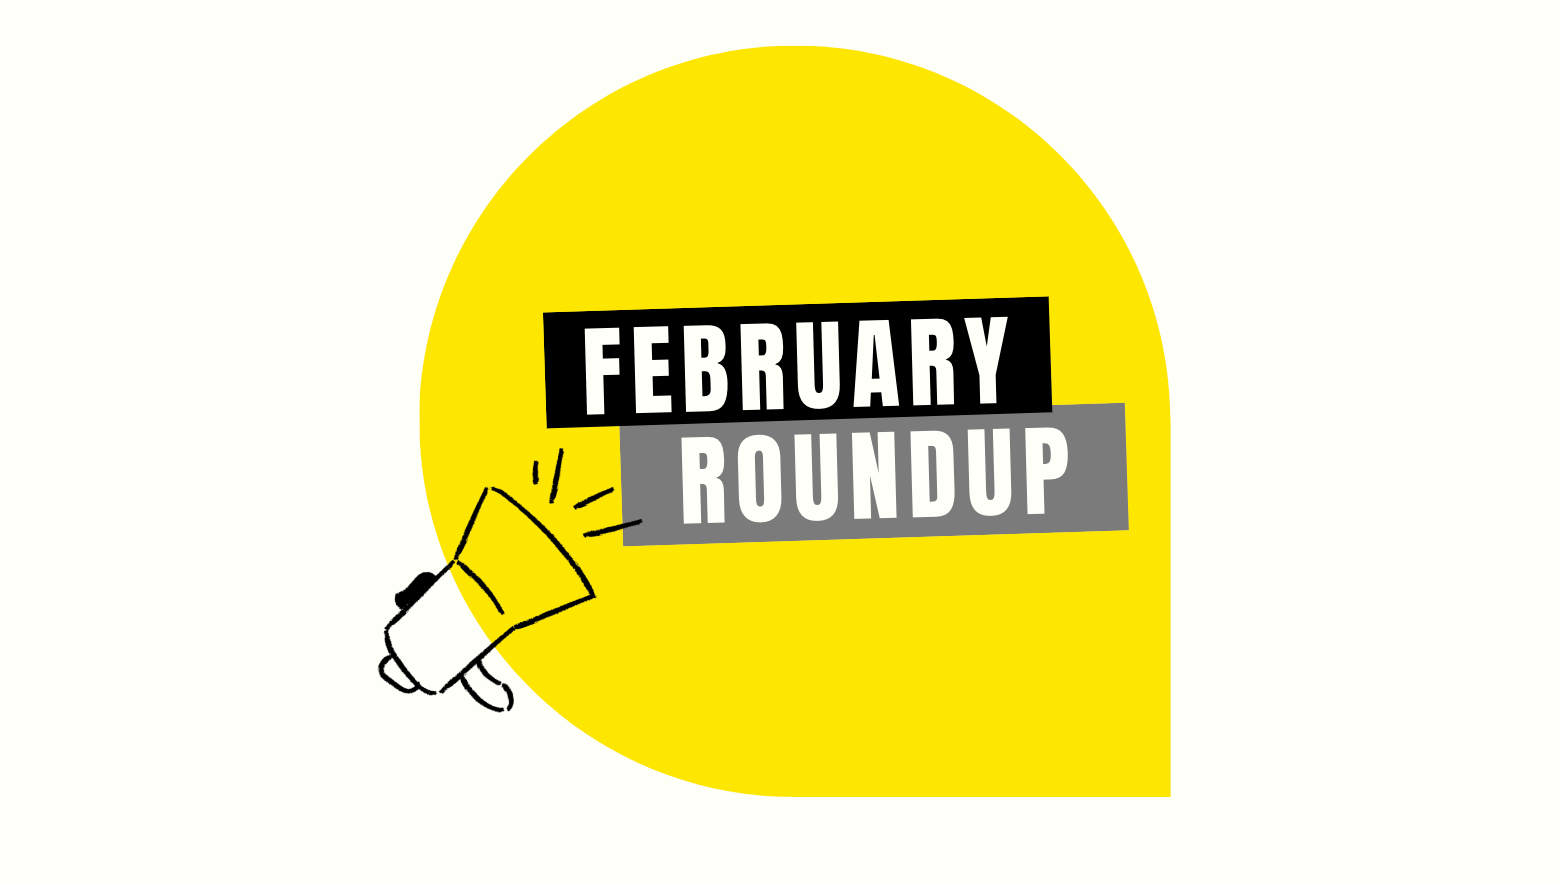 Super Send February Roundup